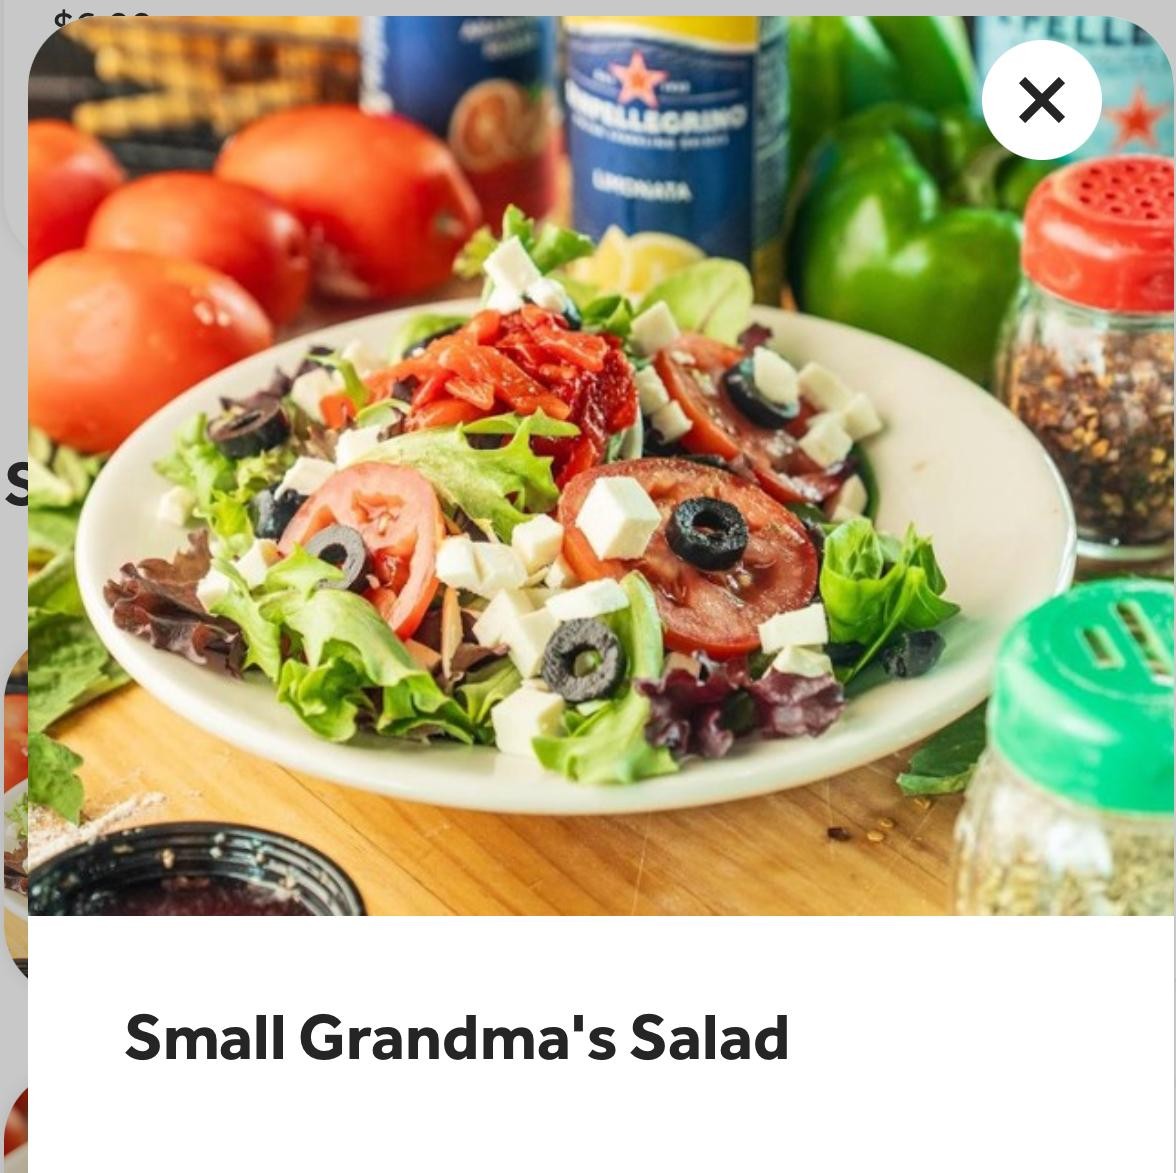 Small Grandma's Salad